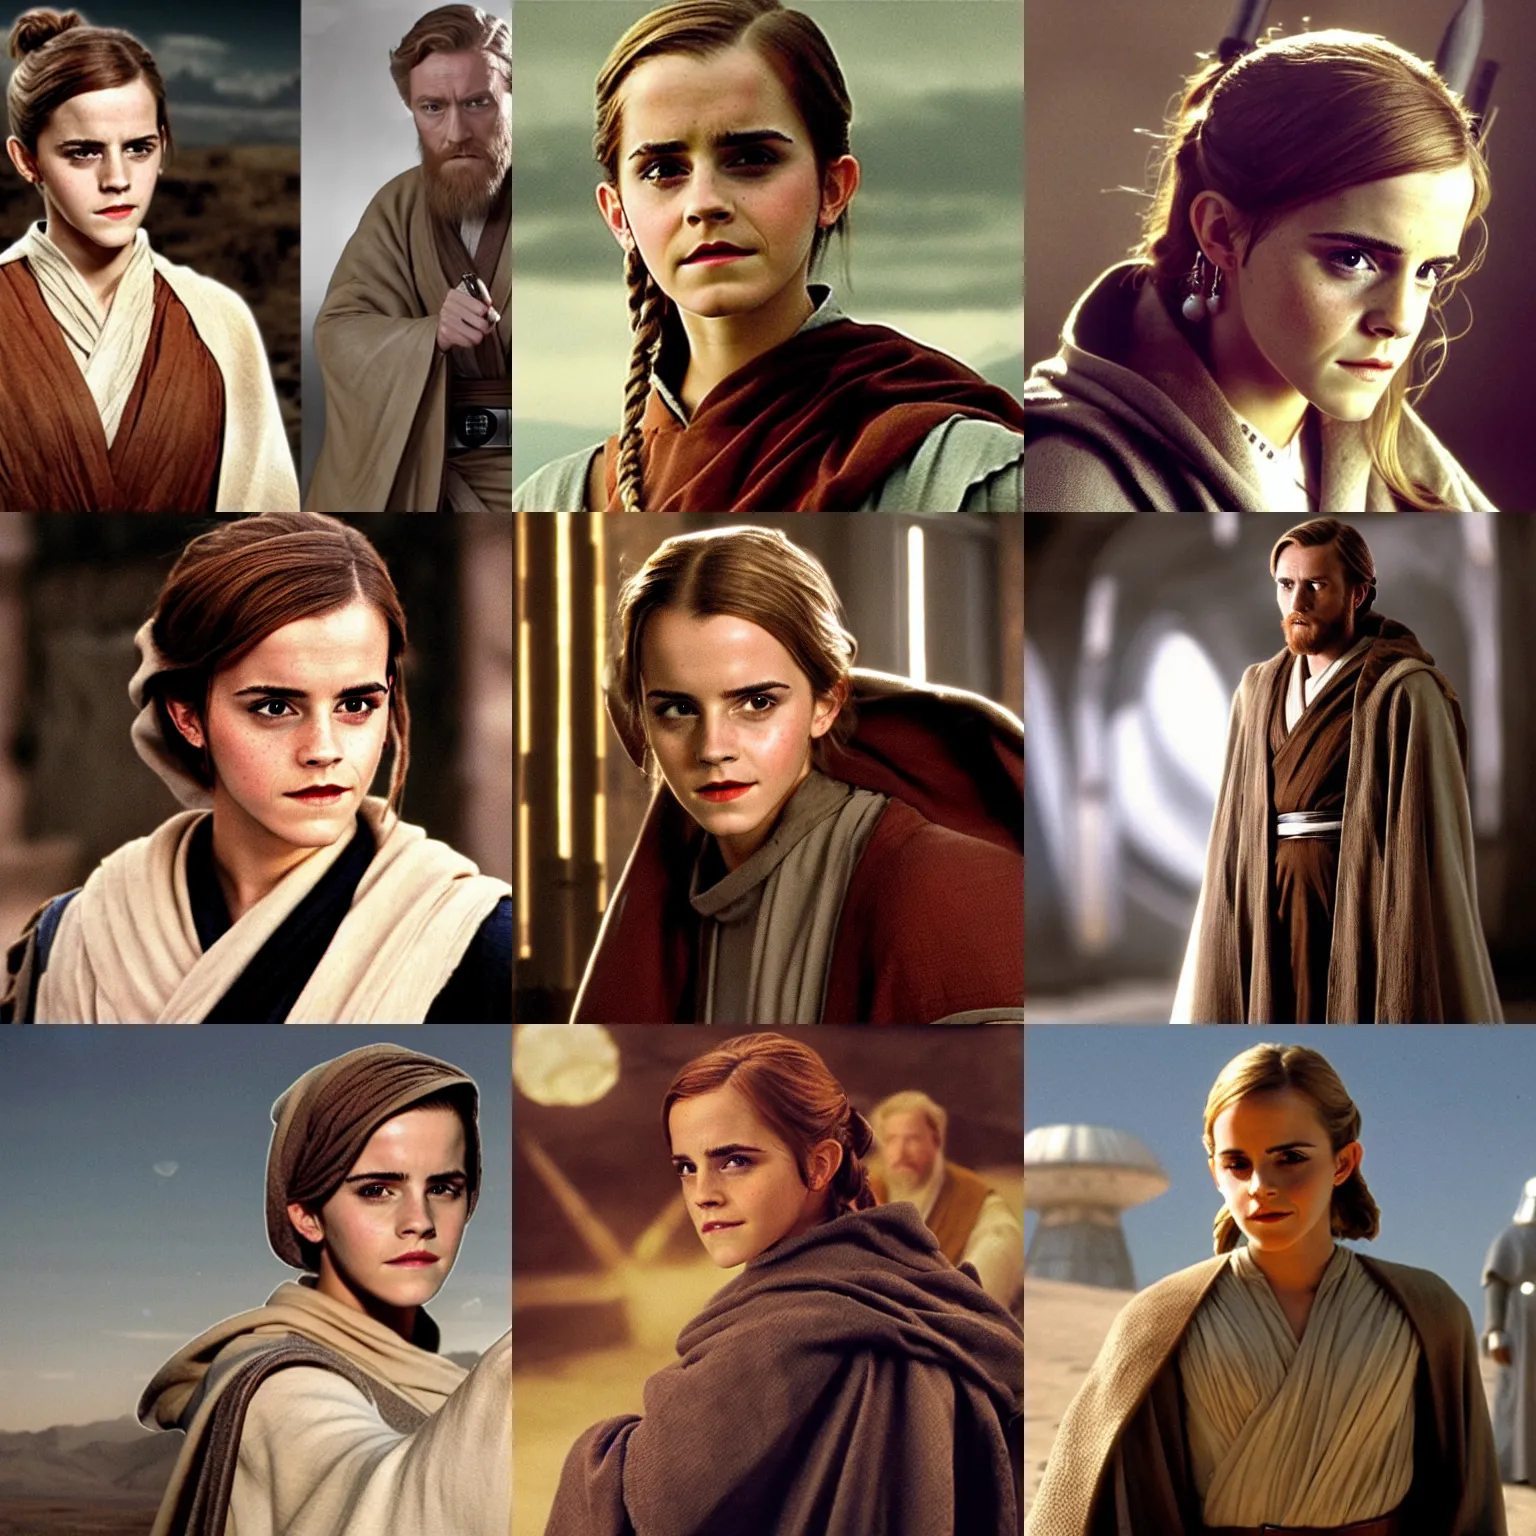 Prompt: Emma Watson as Obi-Wan Kenobi in the original Star Wars